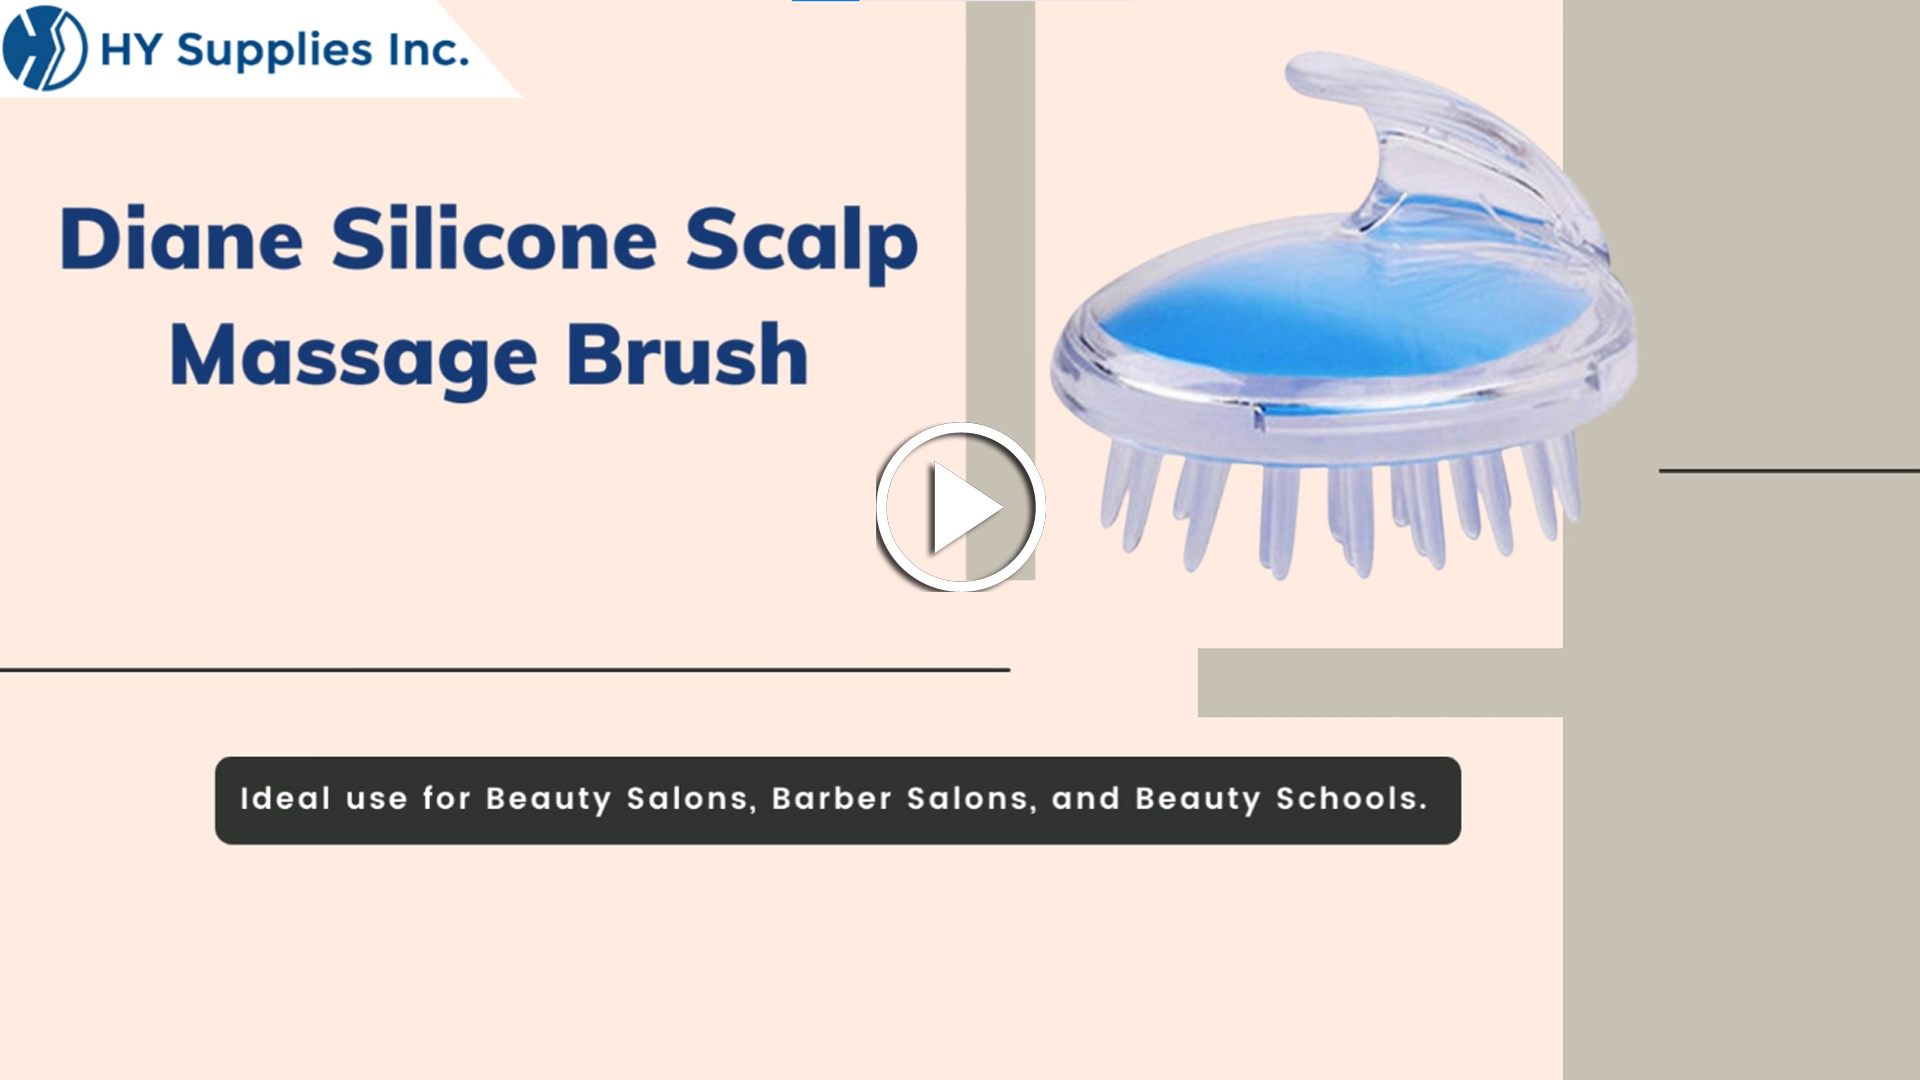 Diane Silicone Scalp Massage Brush